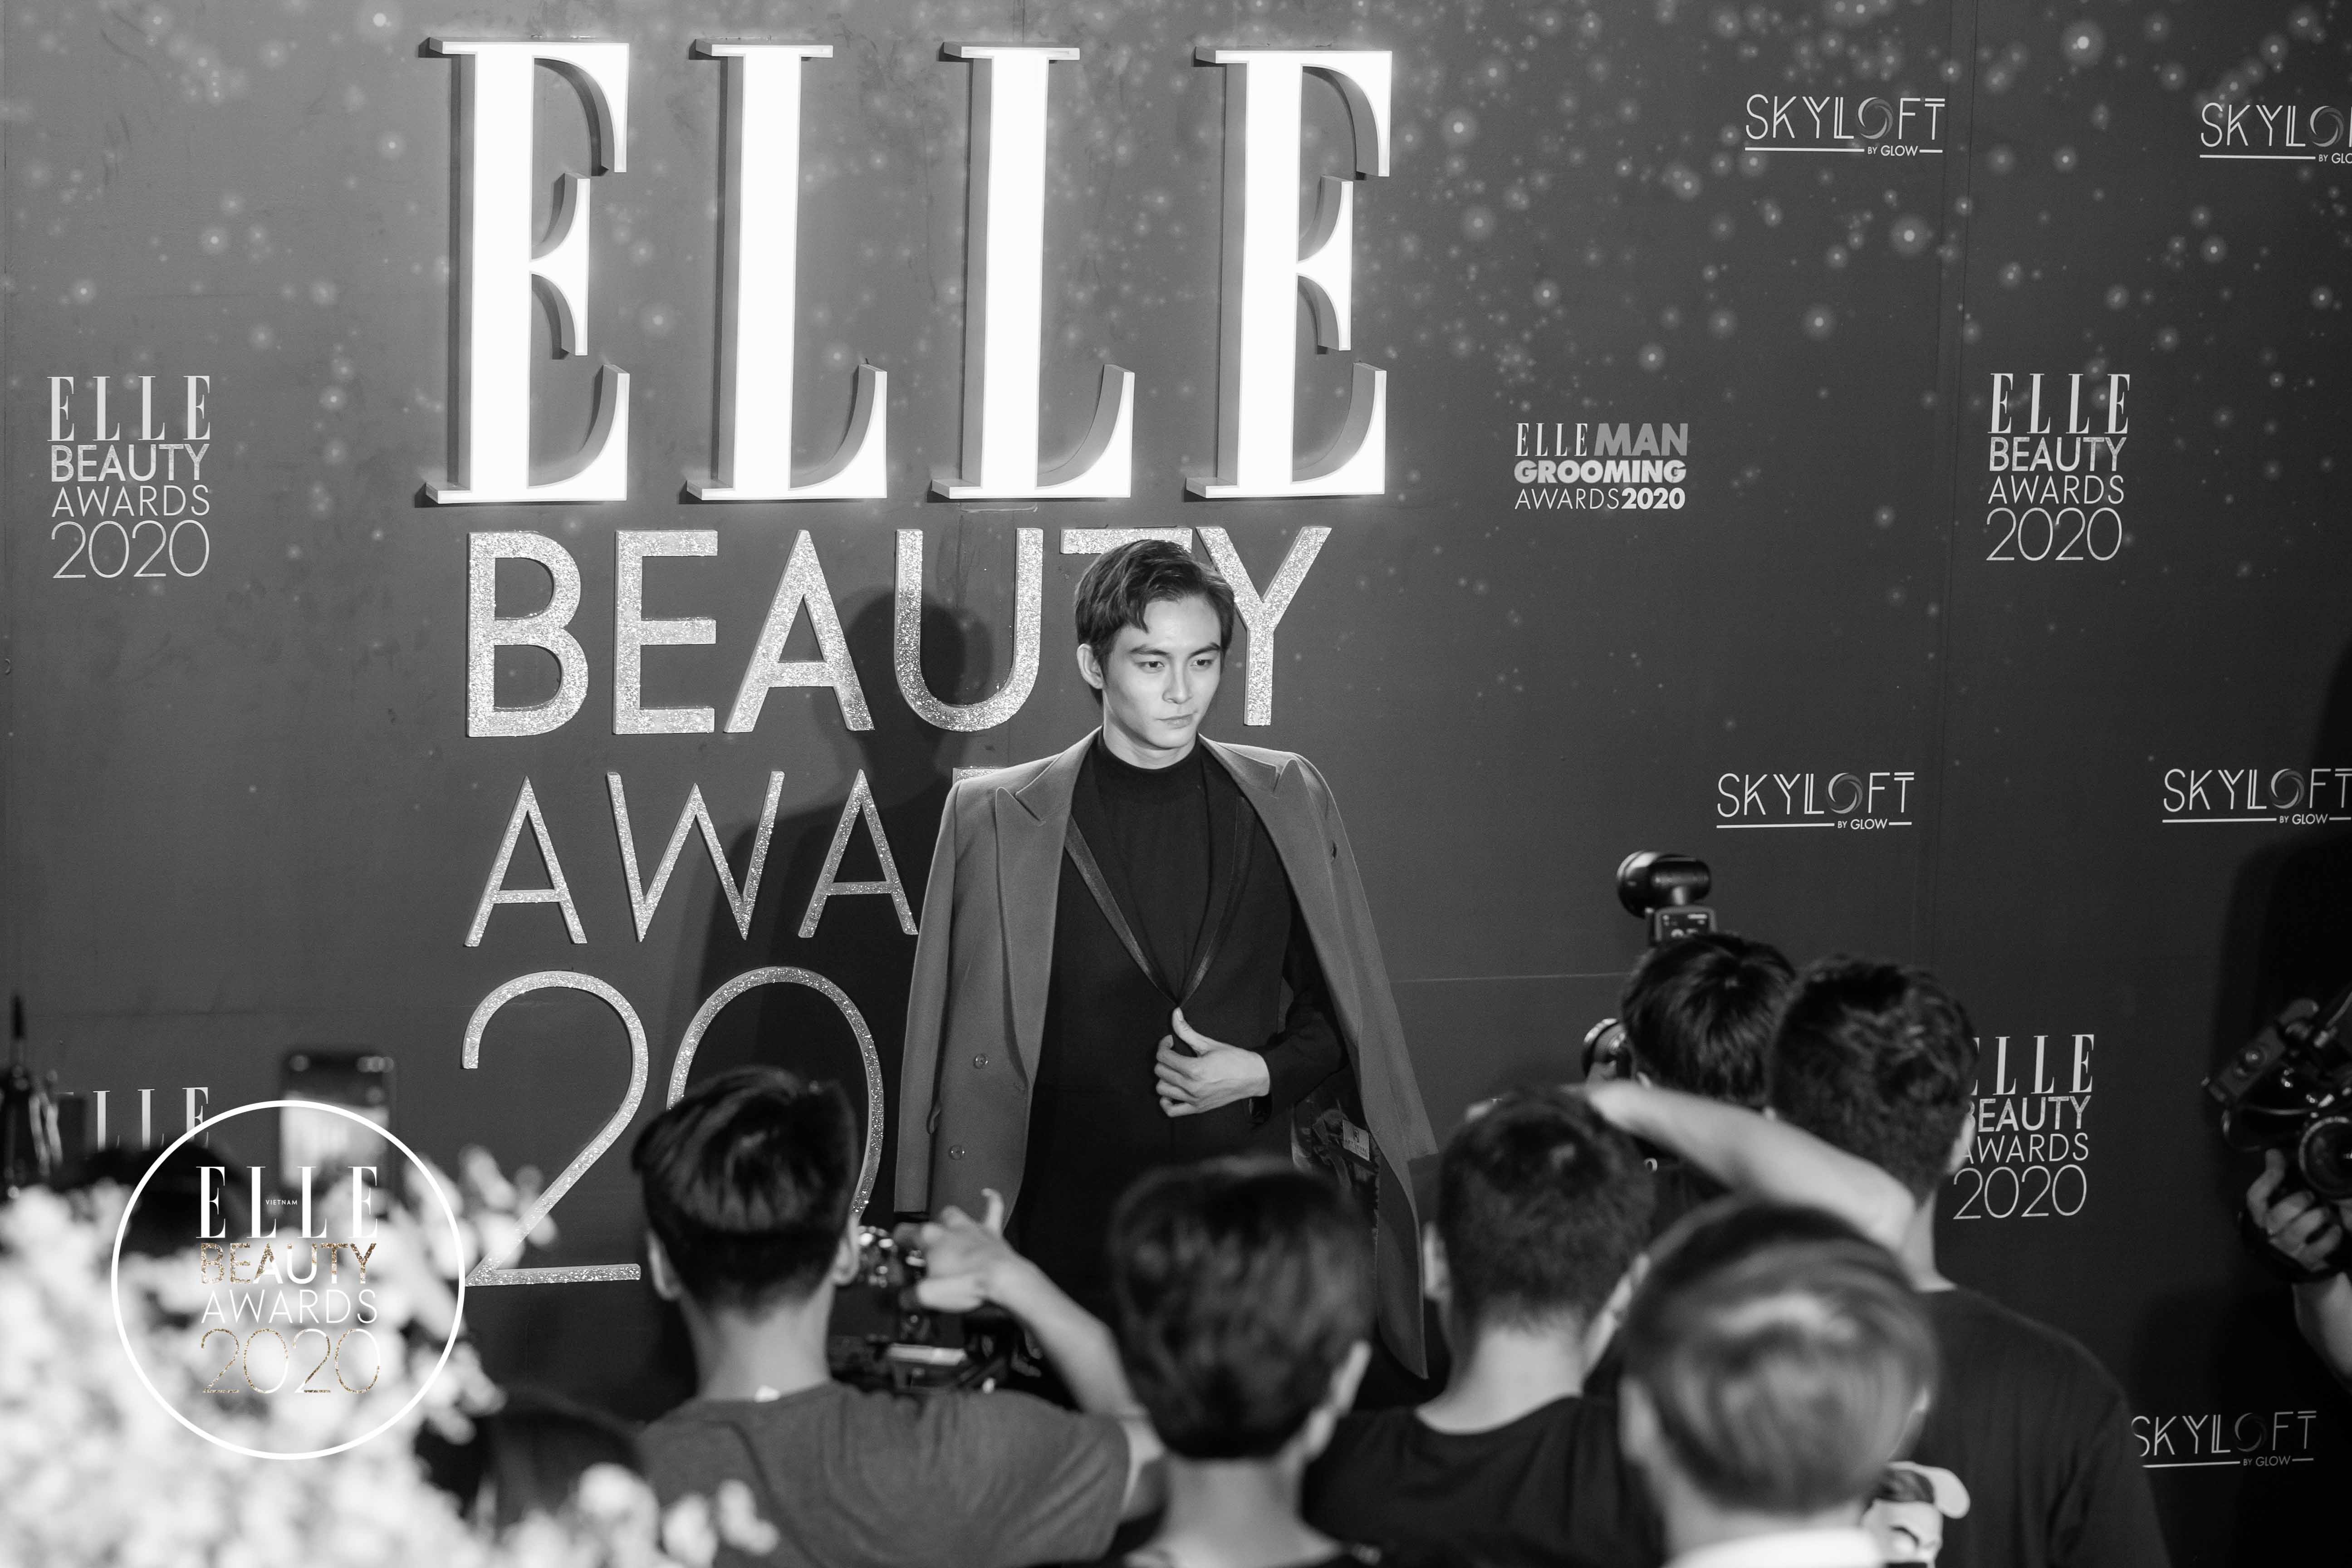 lanh thanh-elle beauty awards 2020-elleman-1219